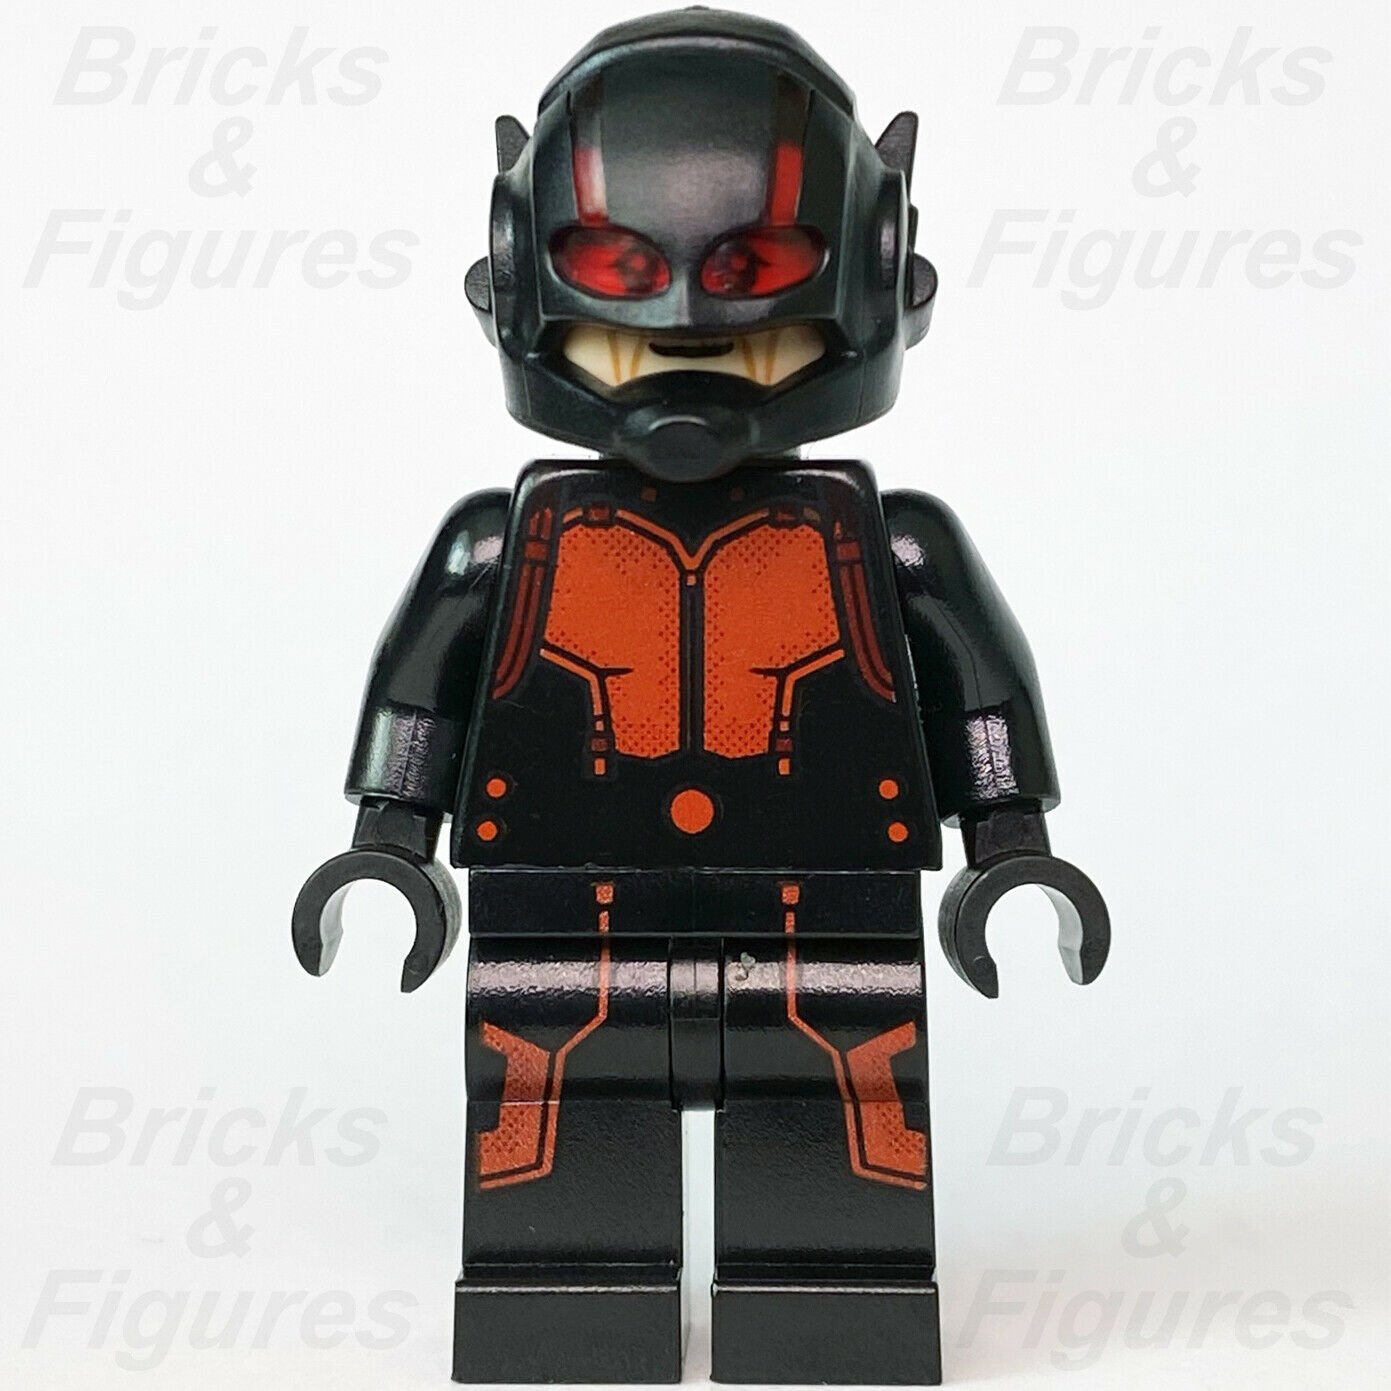 New Marvel Super Heroes LEGO Hank Pym Ant-Man Minifigure from set 76039 - Bricks & Figures